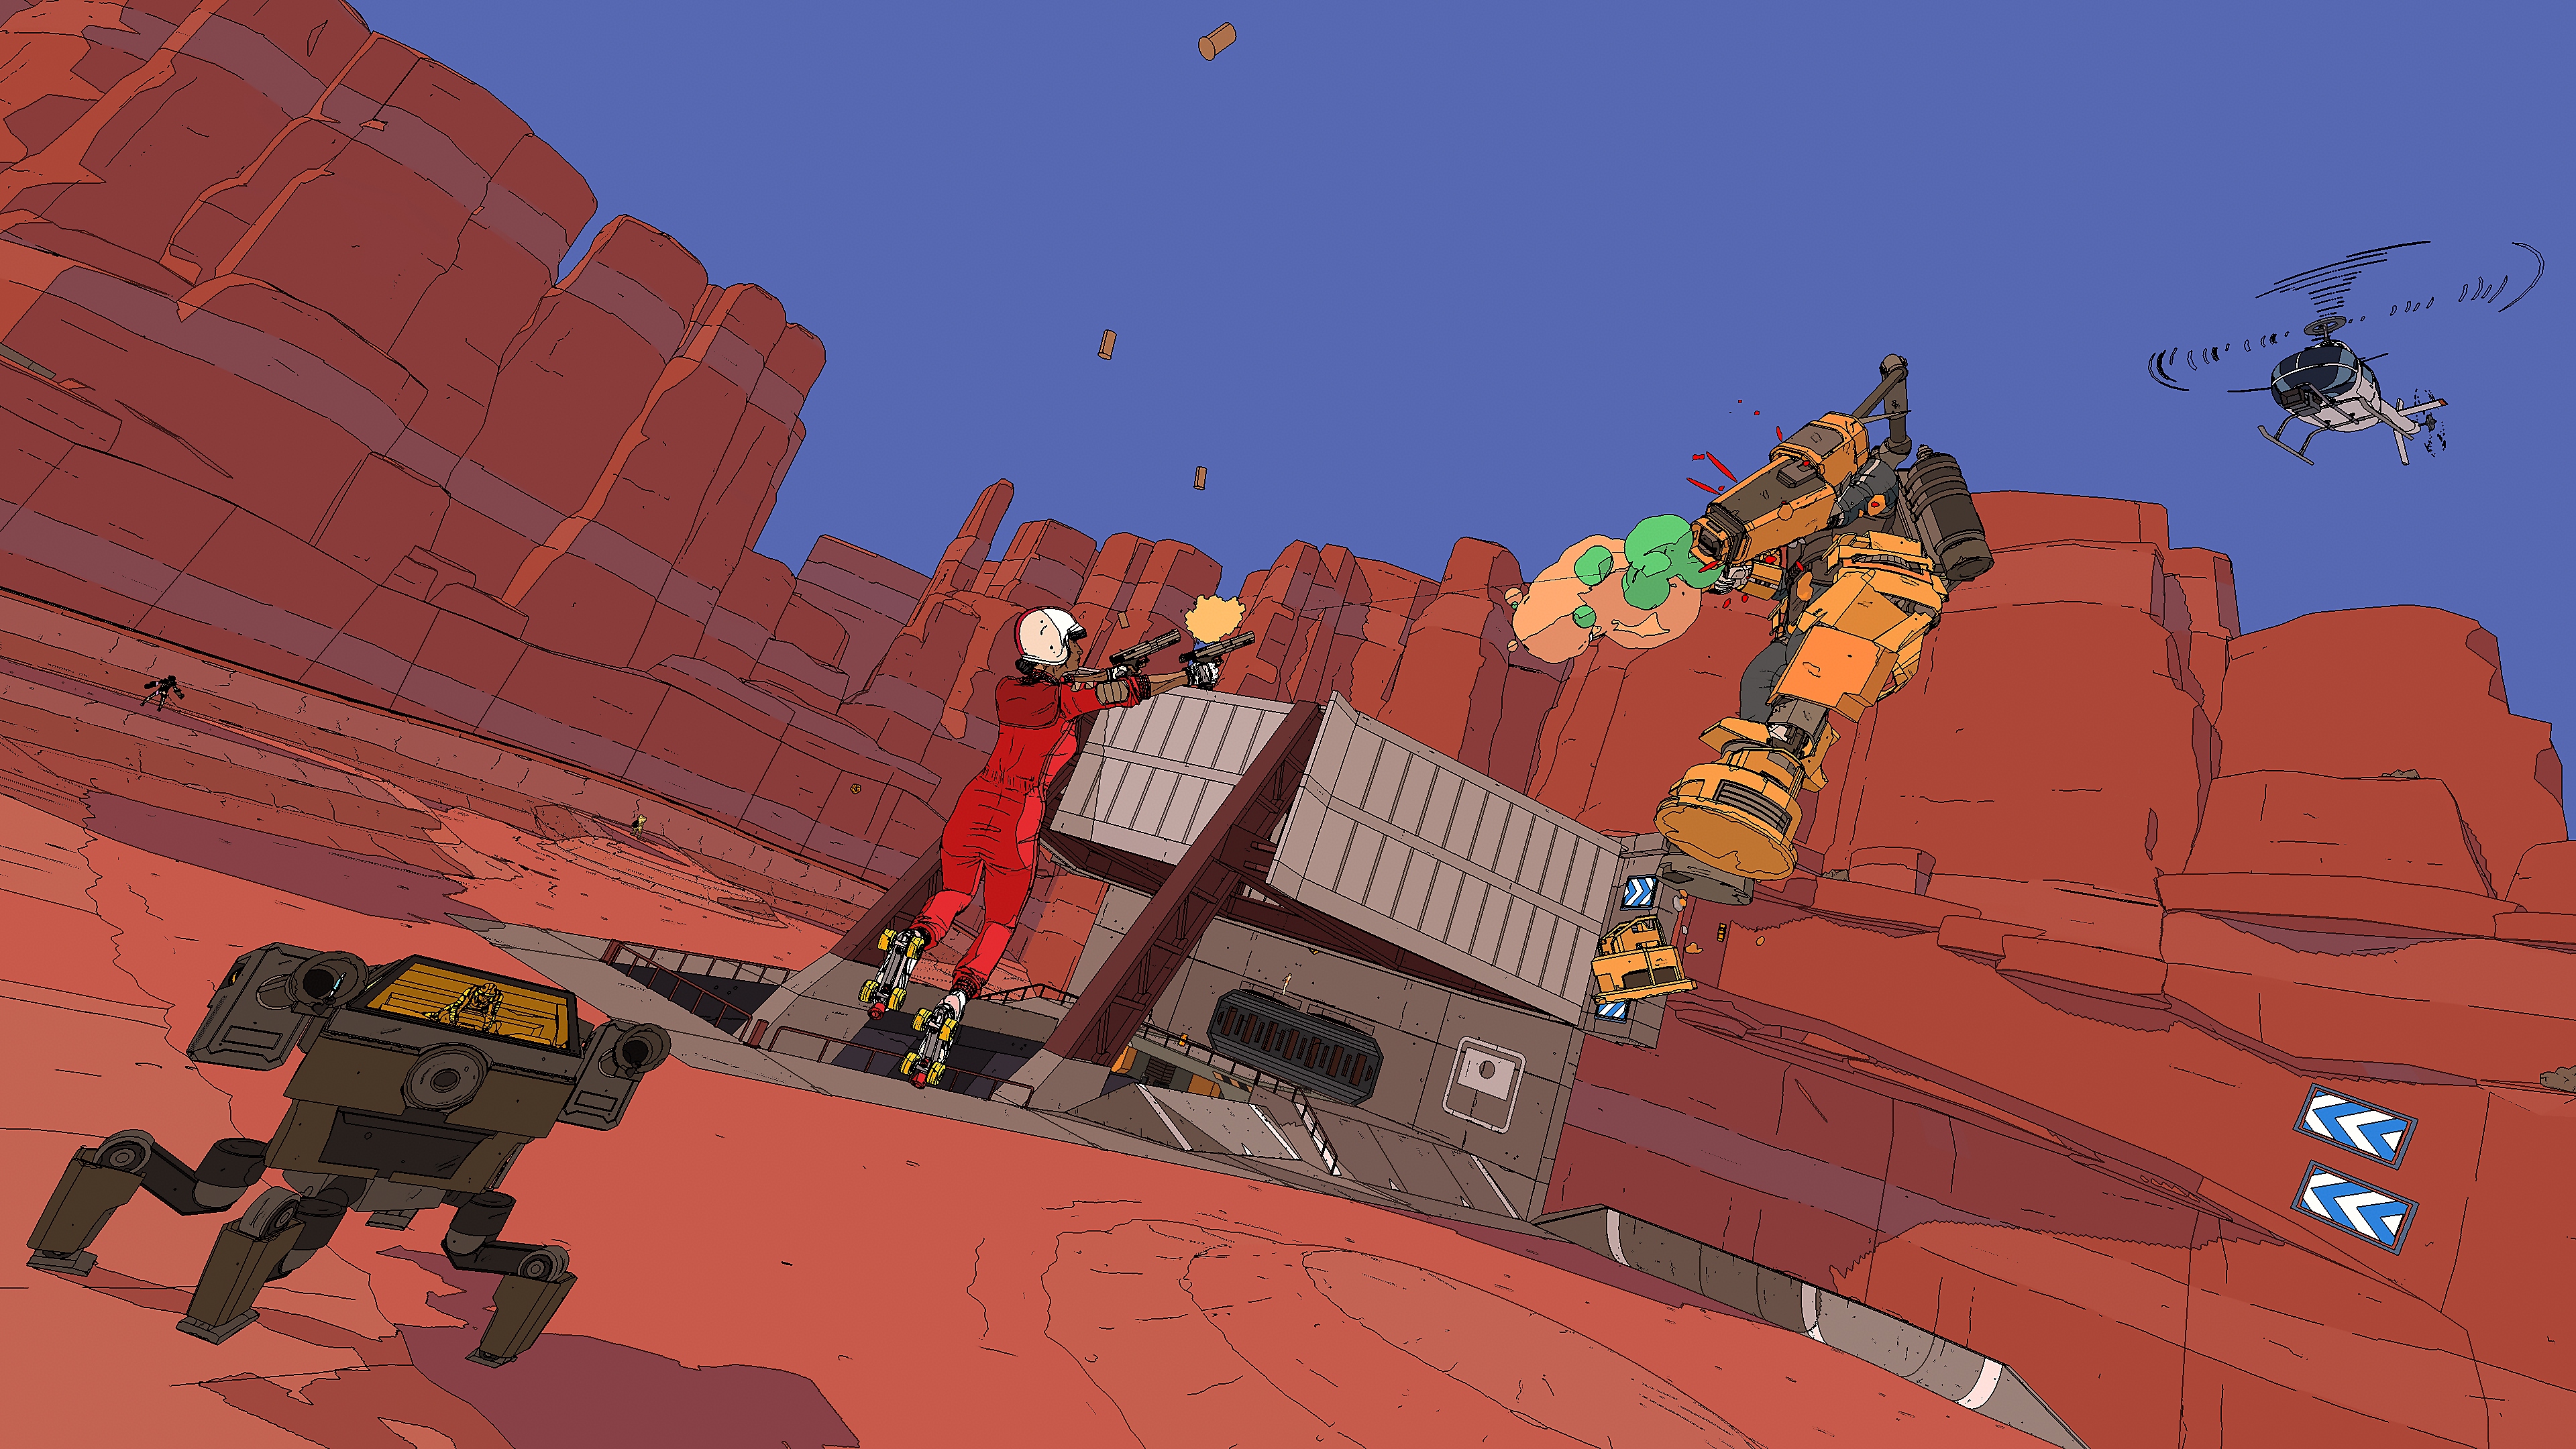 Captura de pantalla de Rollerdrome que muestra combate